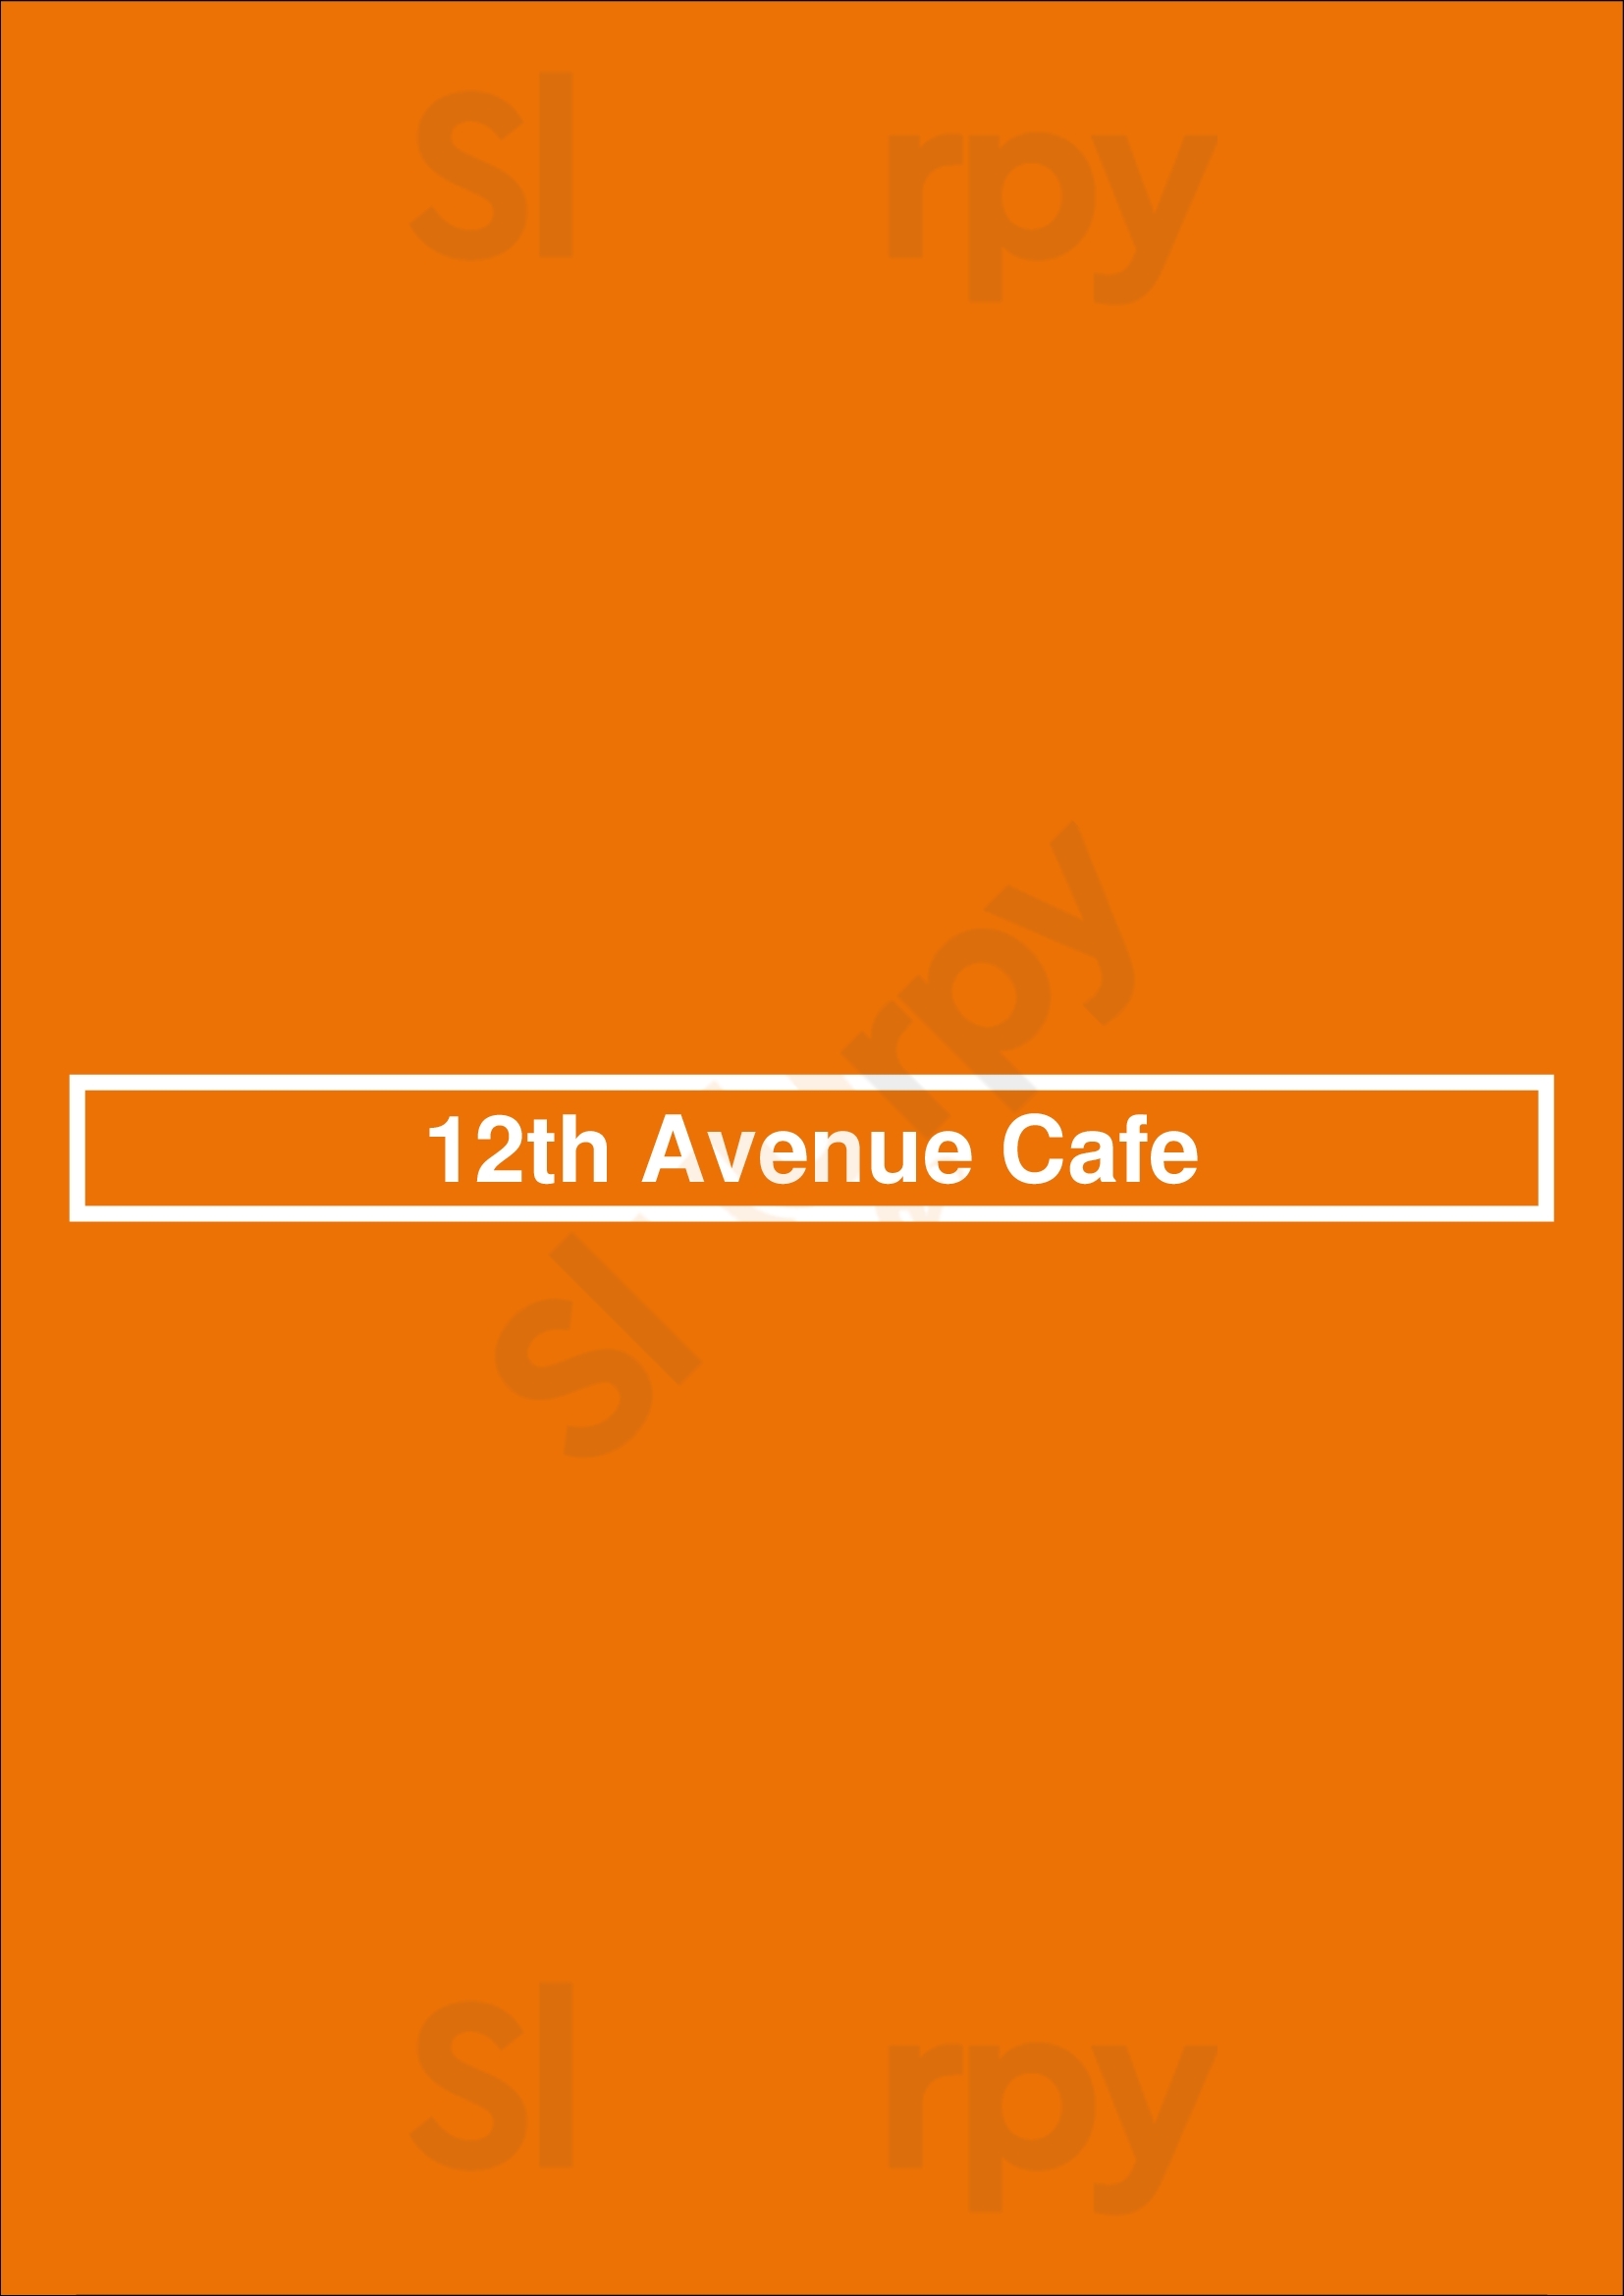 12th Avenue Cafe Issaquah Menu - 1